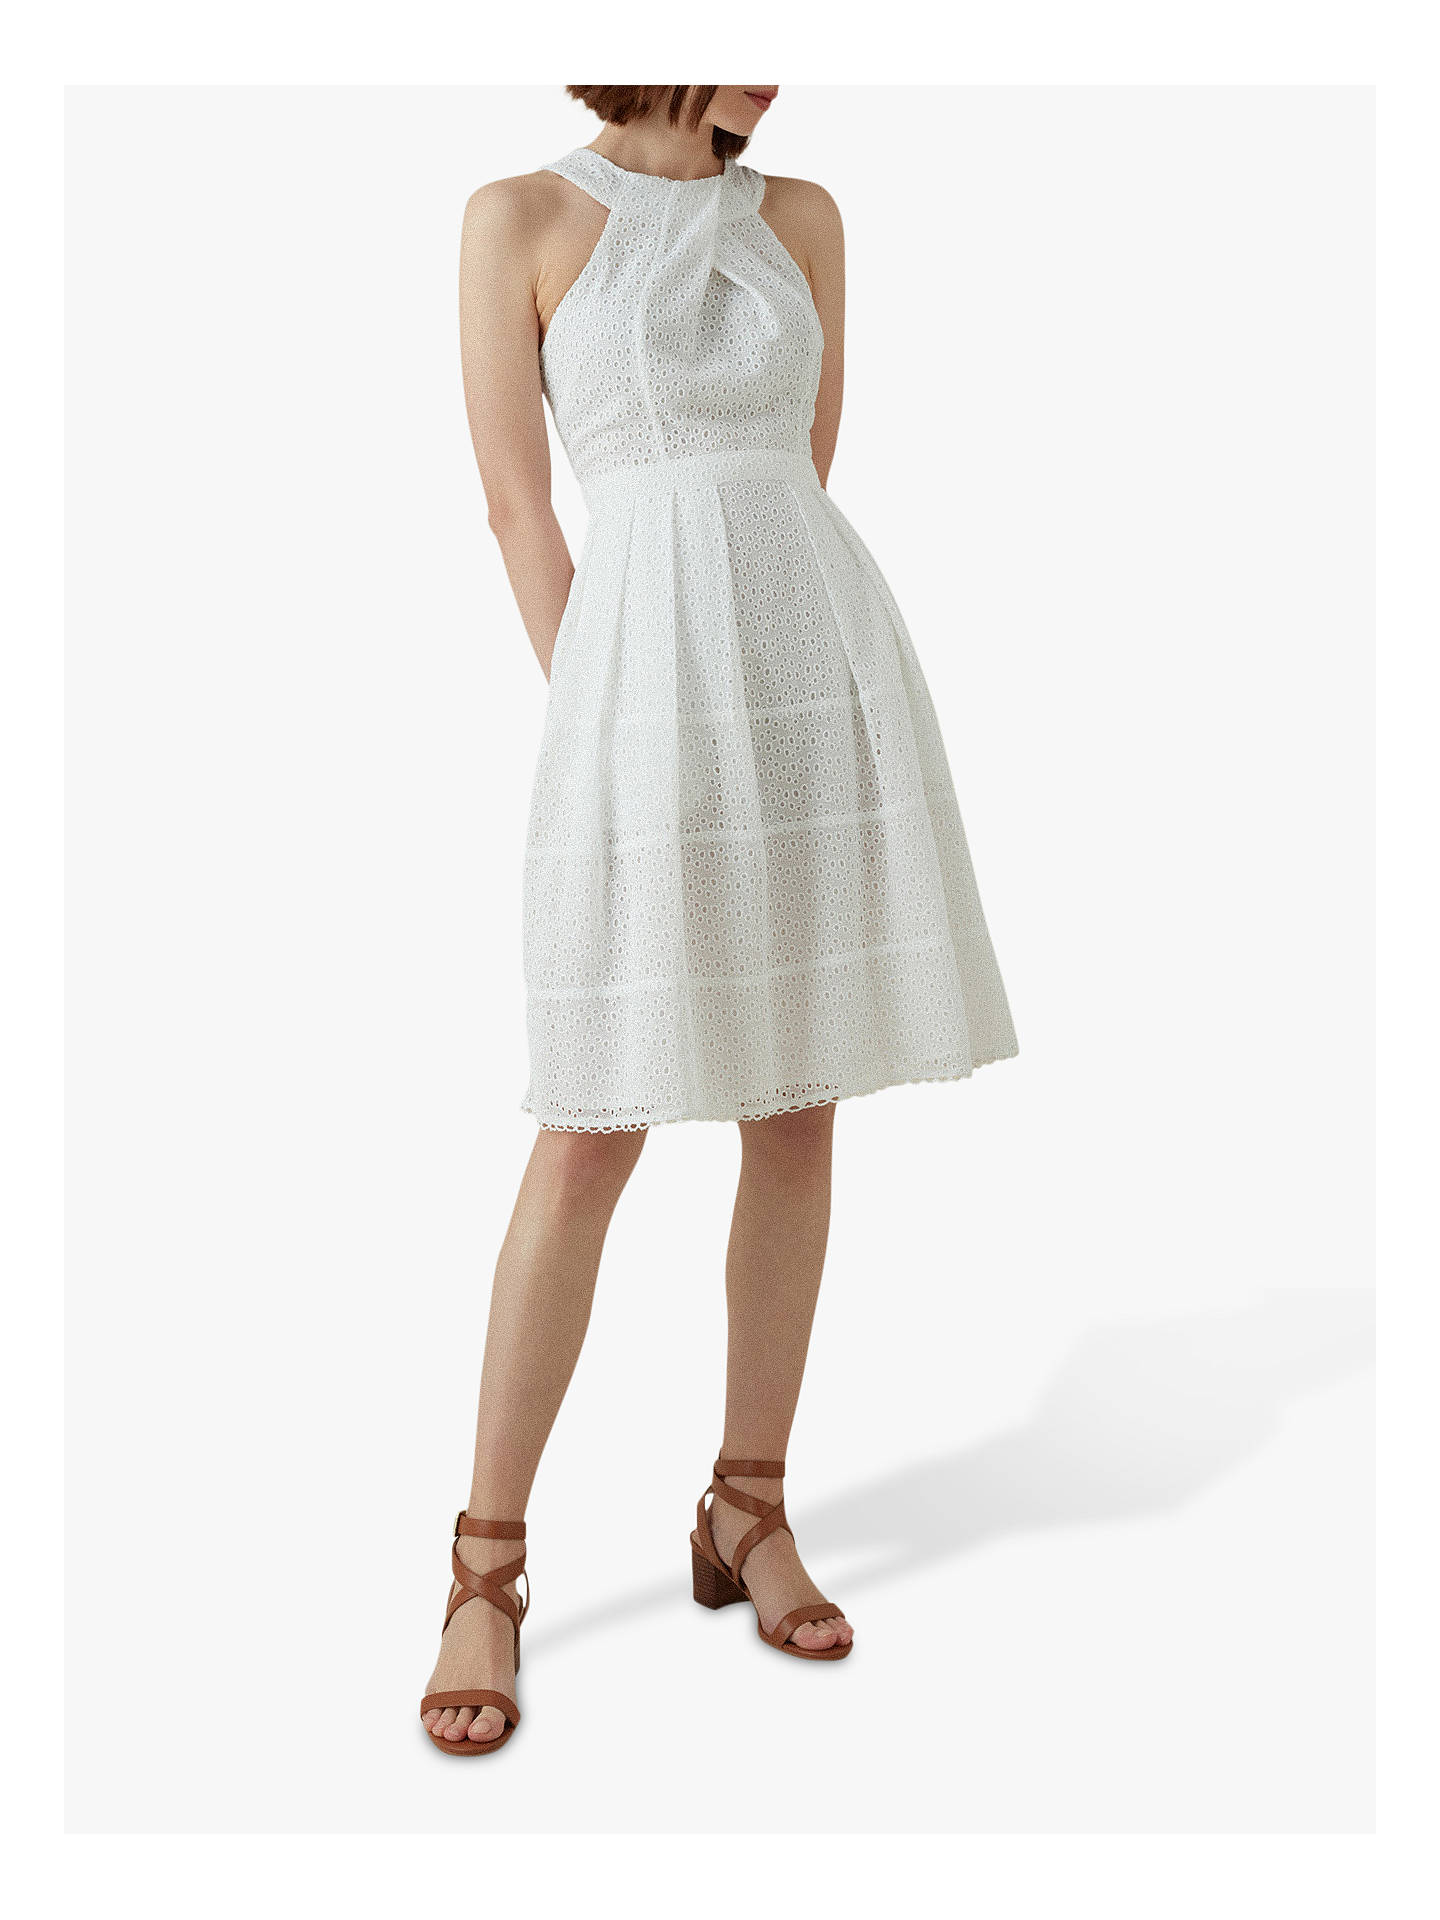 Karen Millen Broderie Halterneck Dress, White at John Lewis & Partners